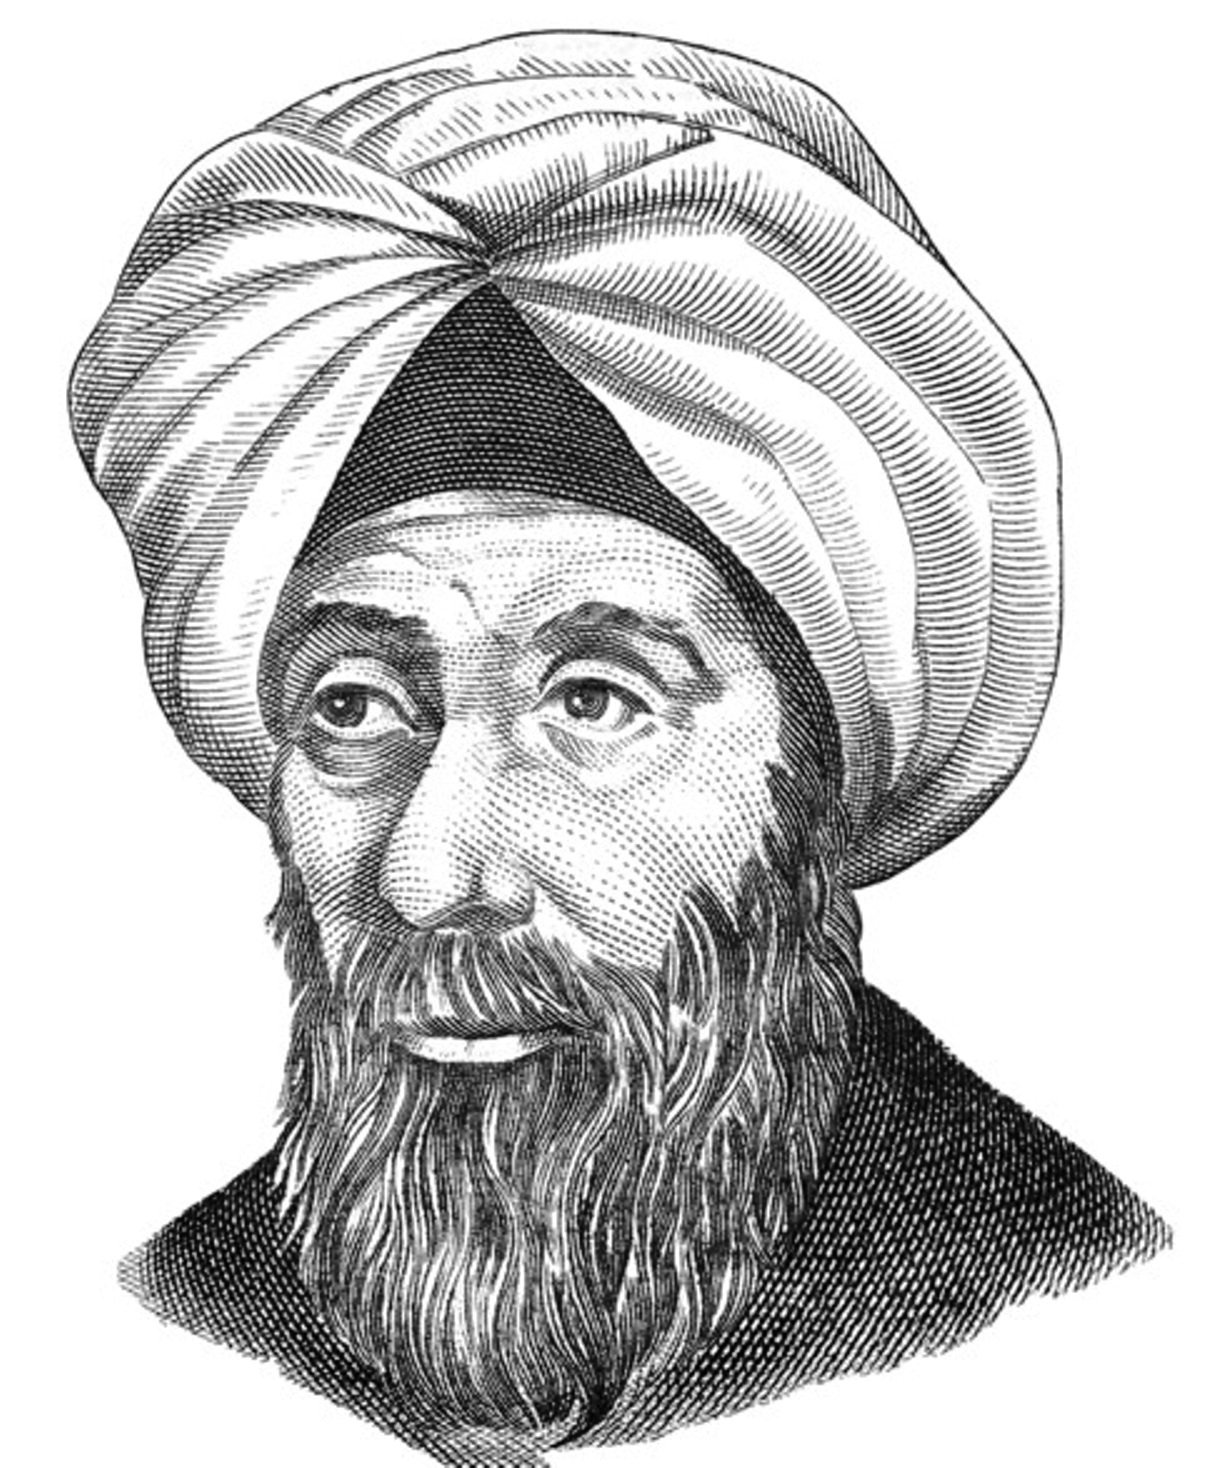 Ибн аль джаррах. Ибн Аль-Хайсам. Ибн ал-Хайсам (Альгазен) (965-1039). Арабский ученый ибн Аль-Хайсам. Ибн Аль-Хайтама (Альхазена).